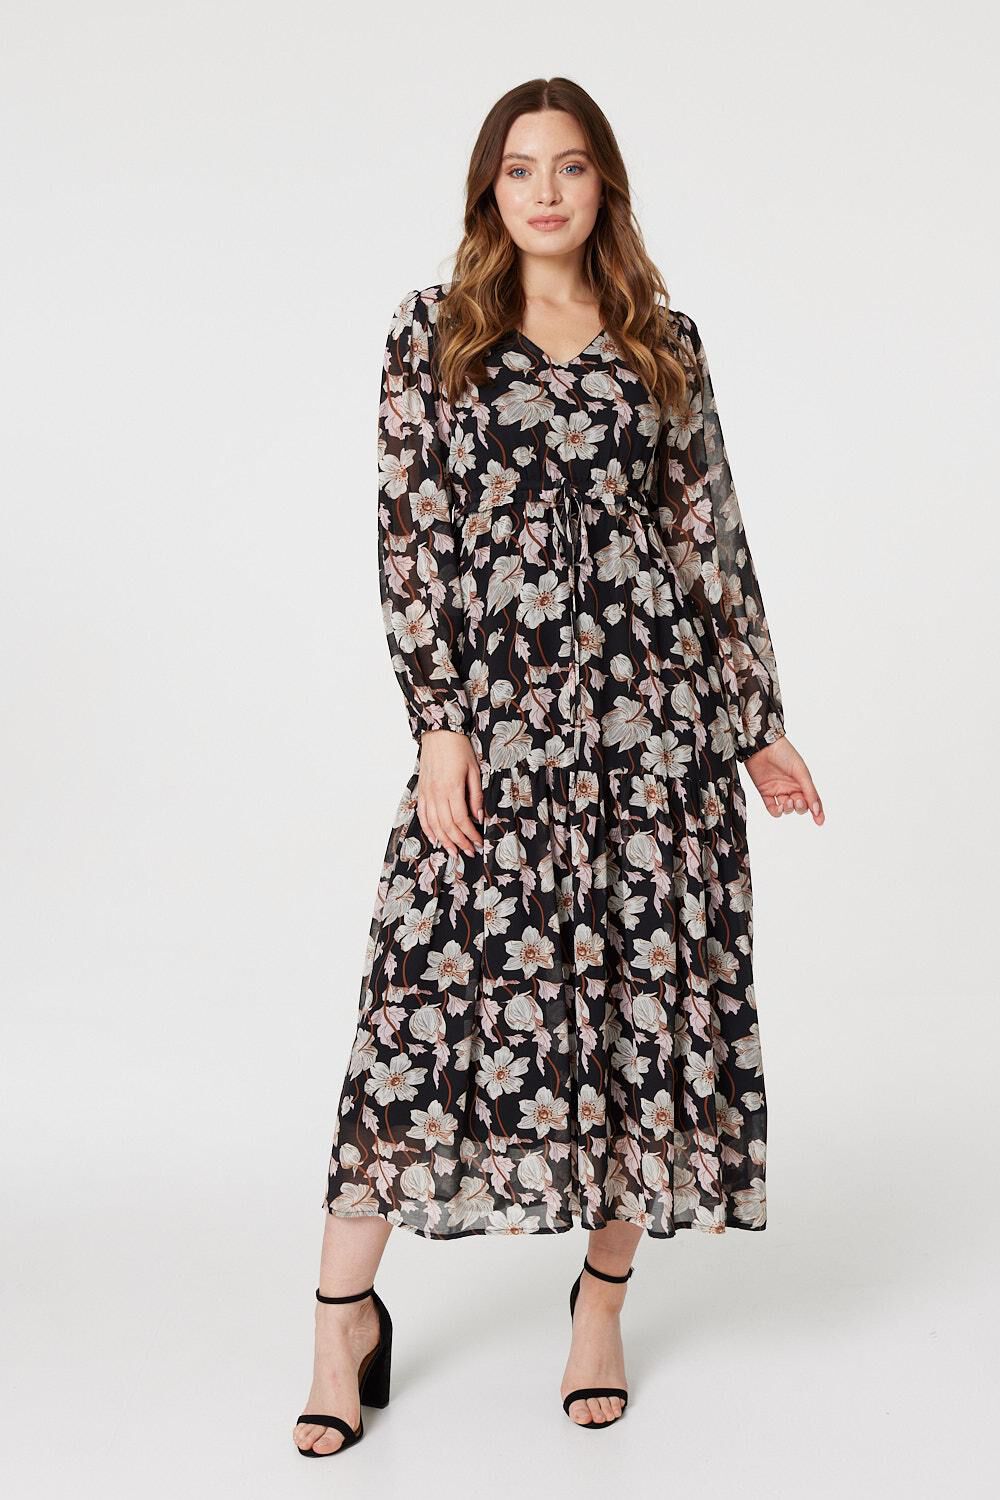 Izabel London Black - Floral Drawstring Waist Midi Dress, Size: 14